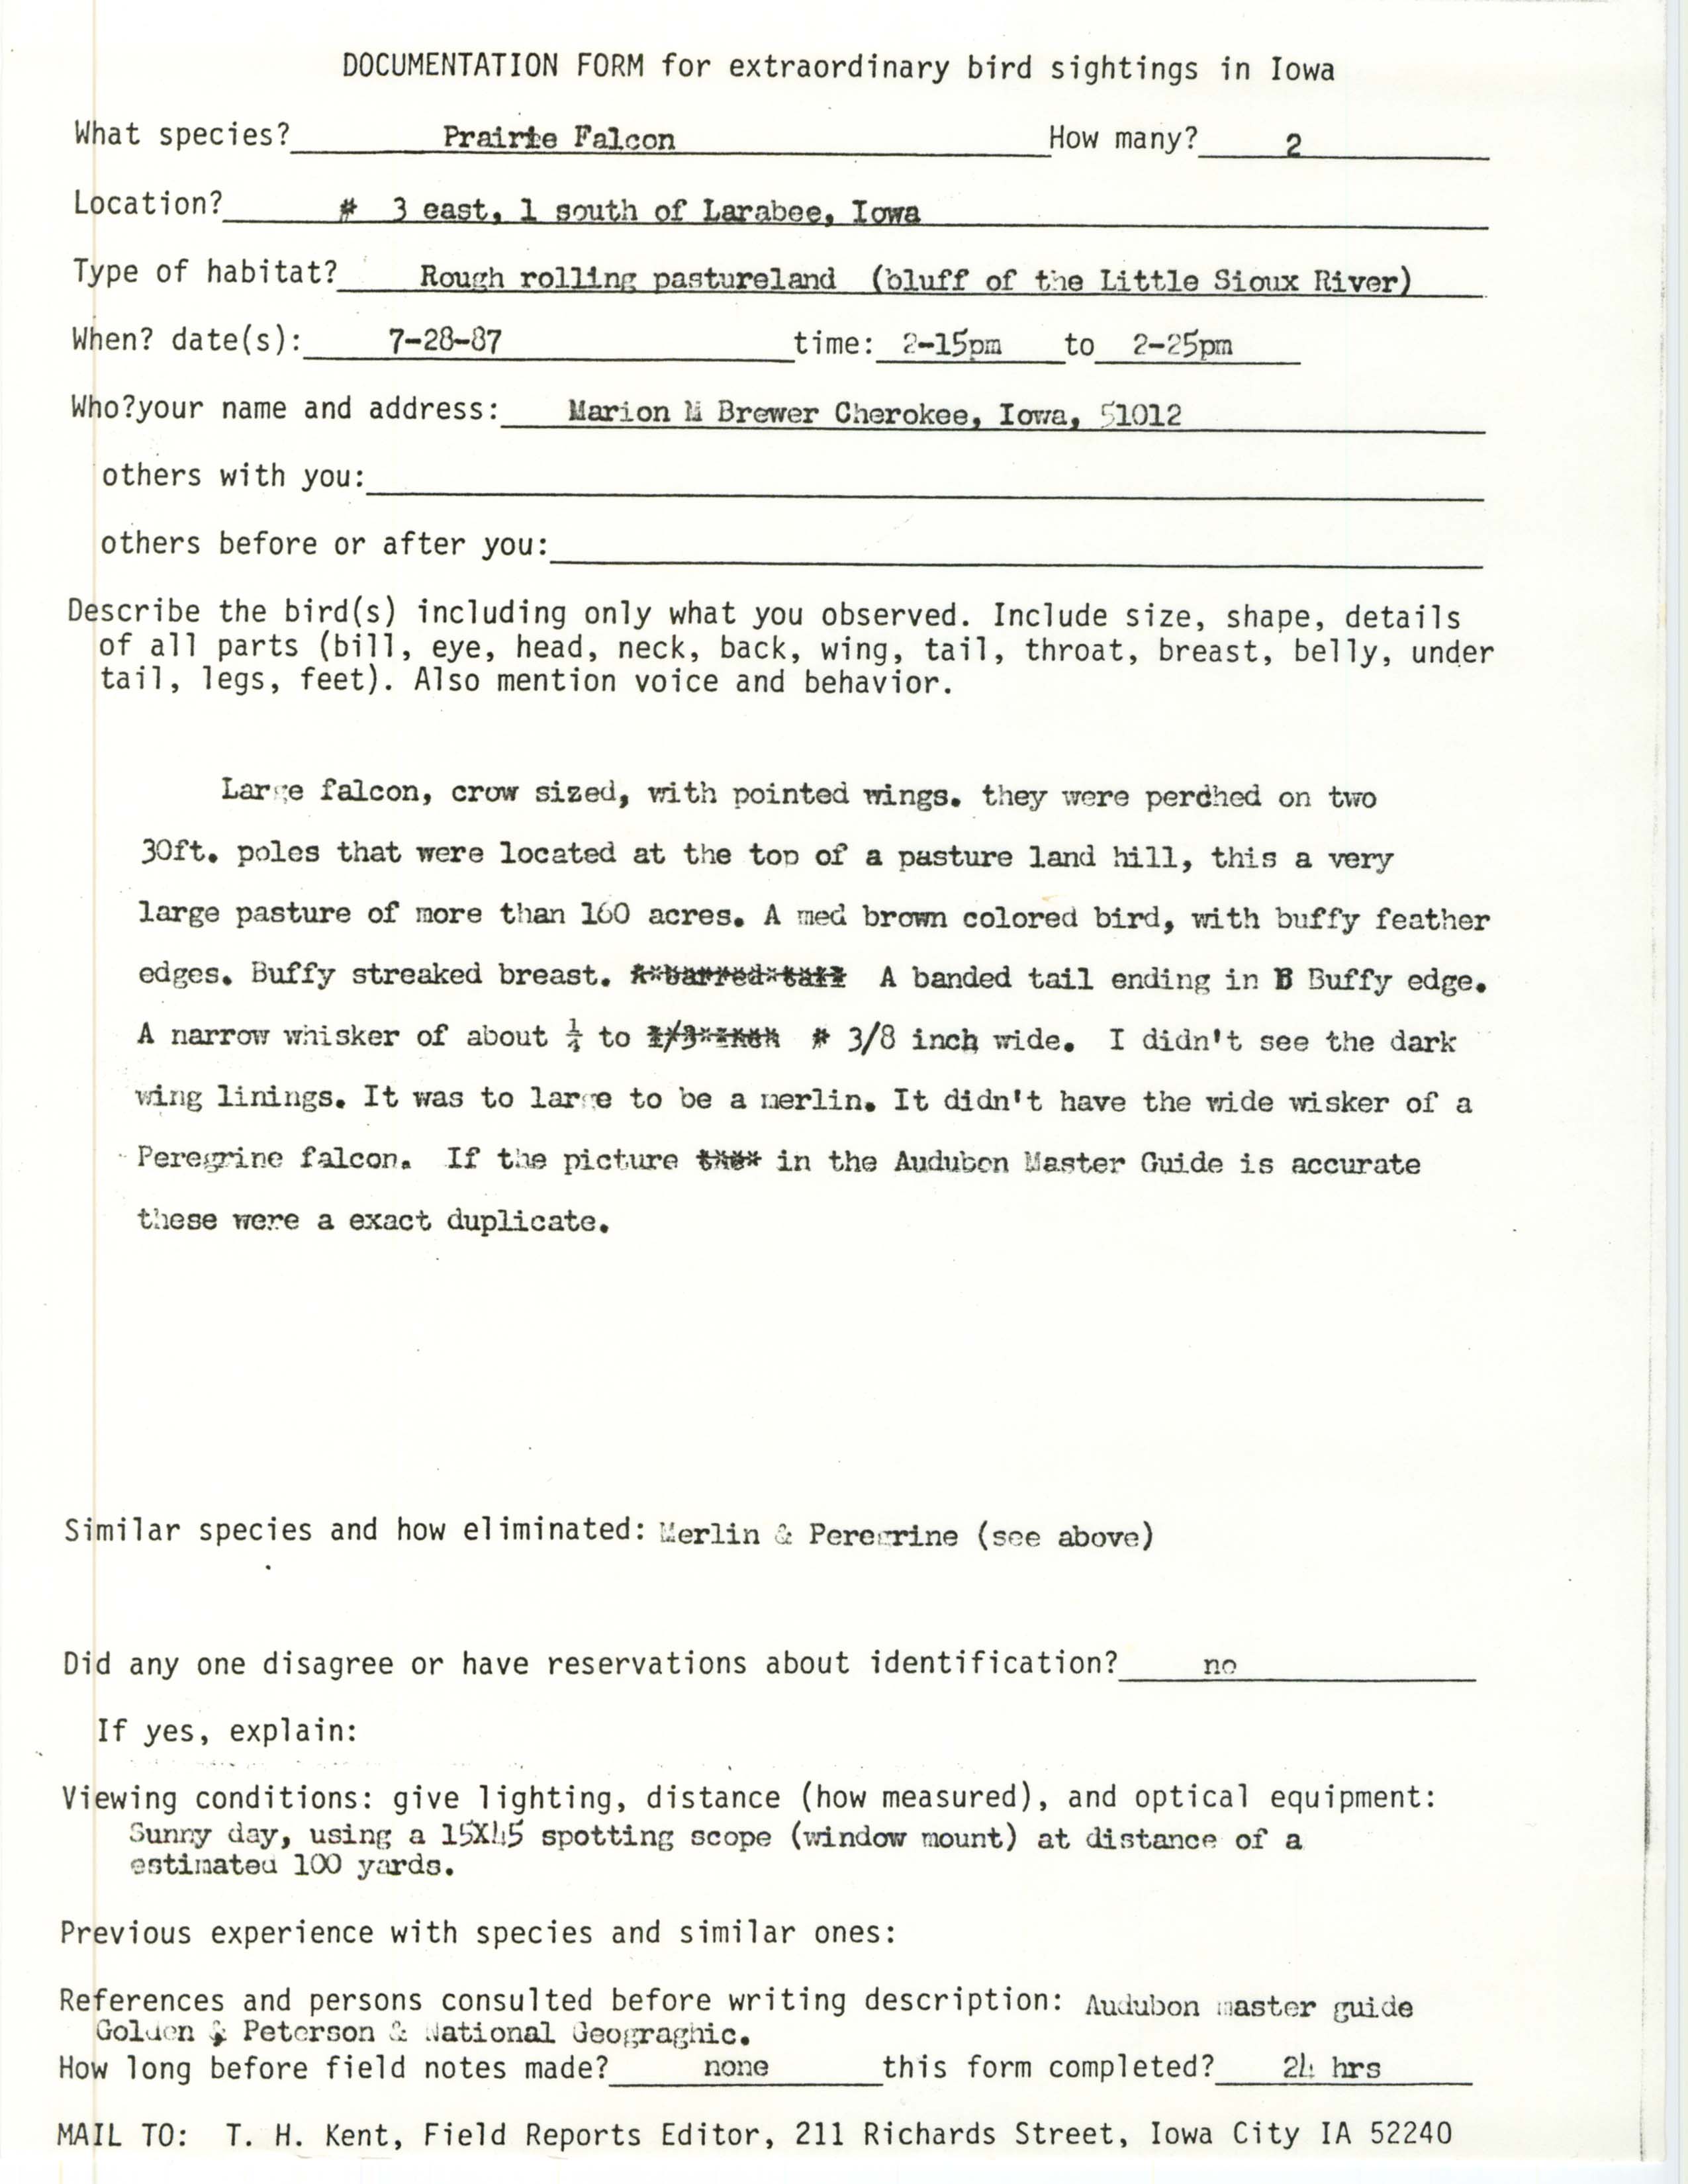 Rare bird documentation form for Prairie Falcon southeast of Larrabee, 1987